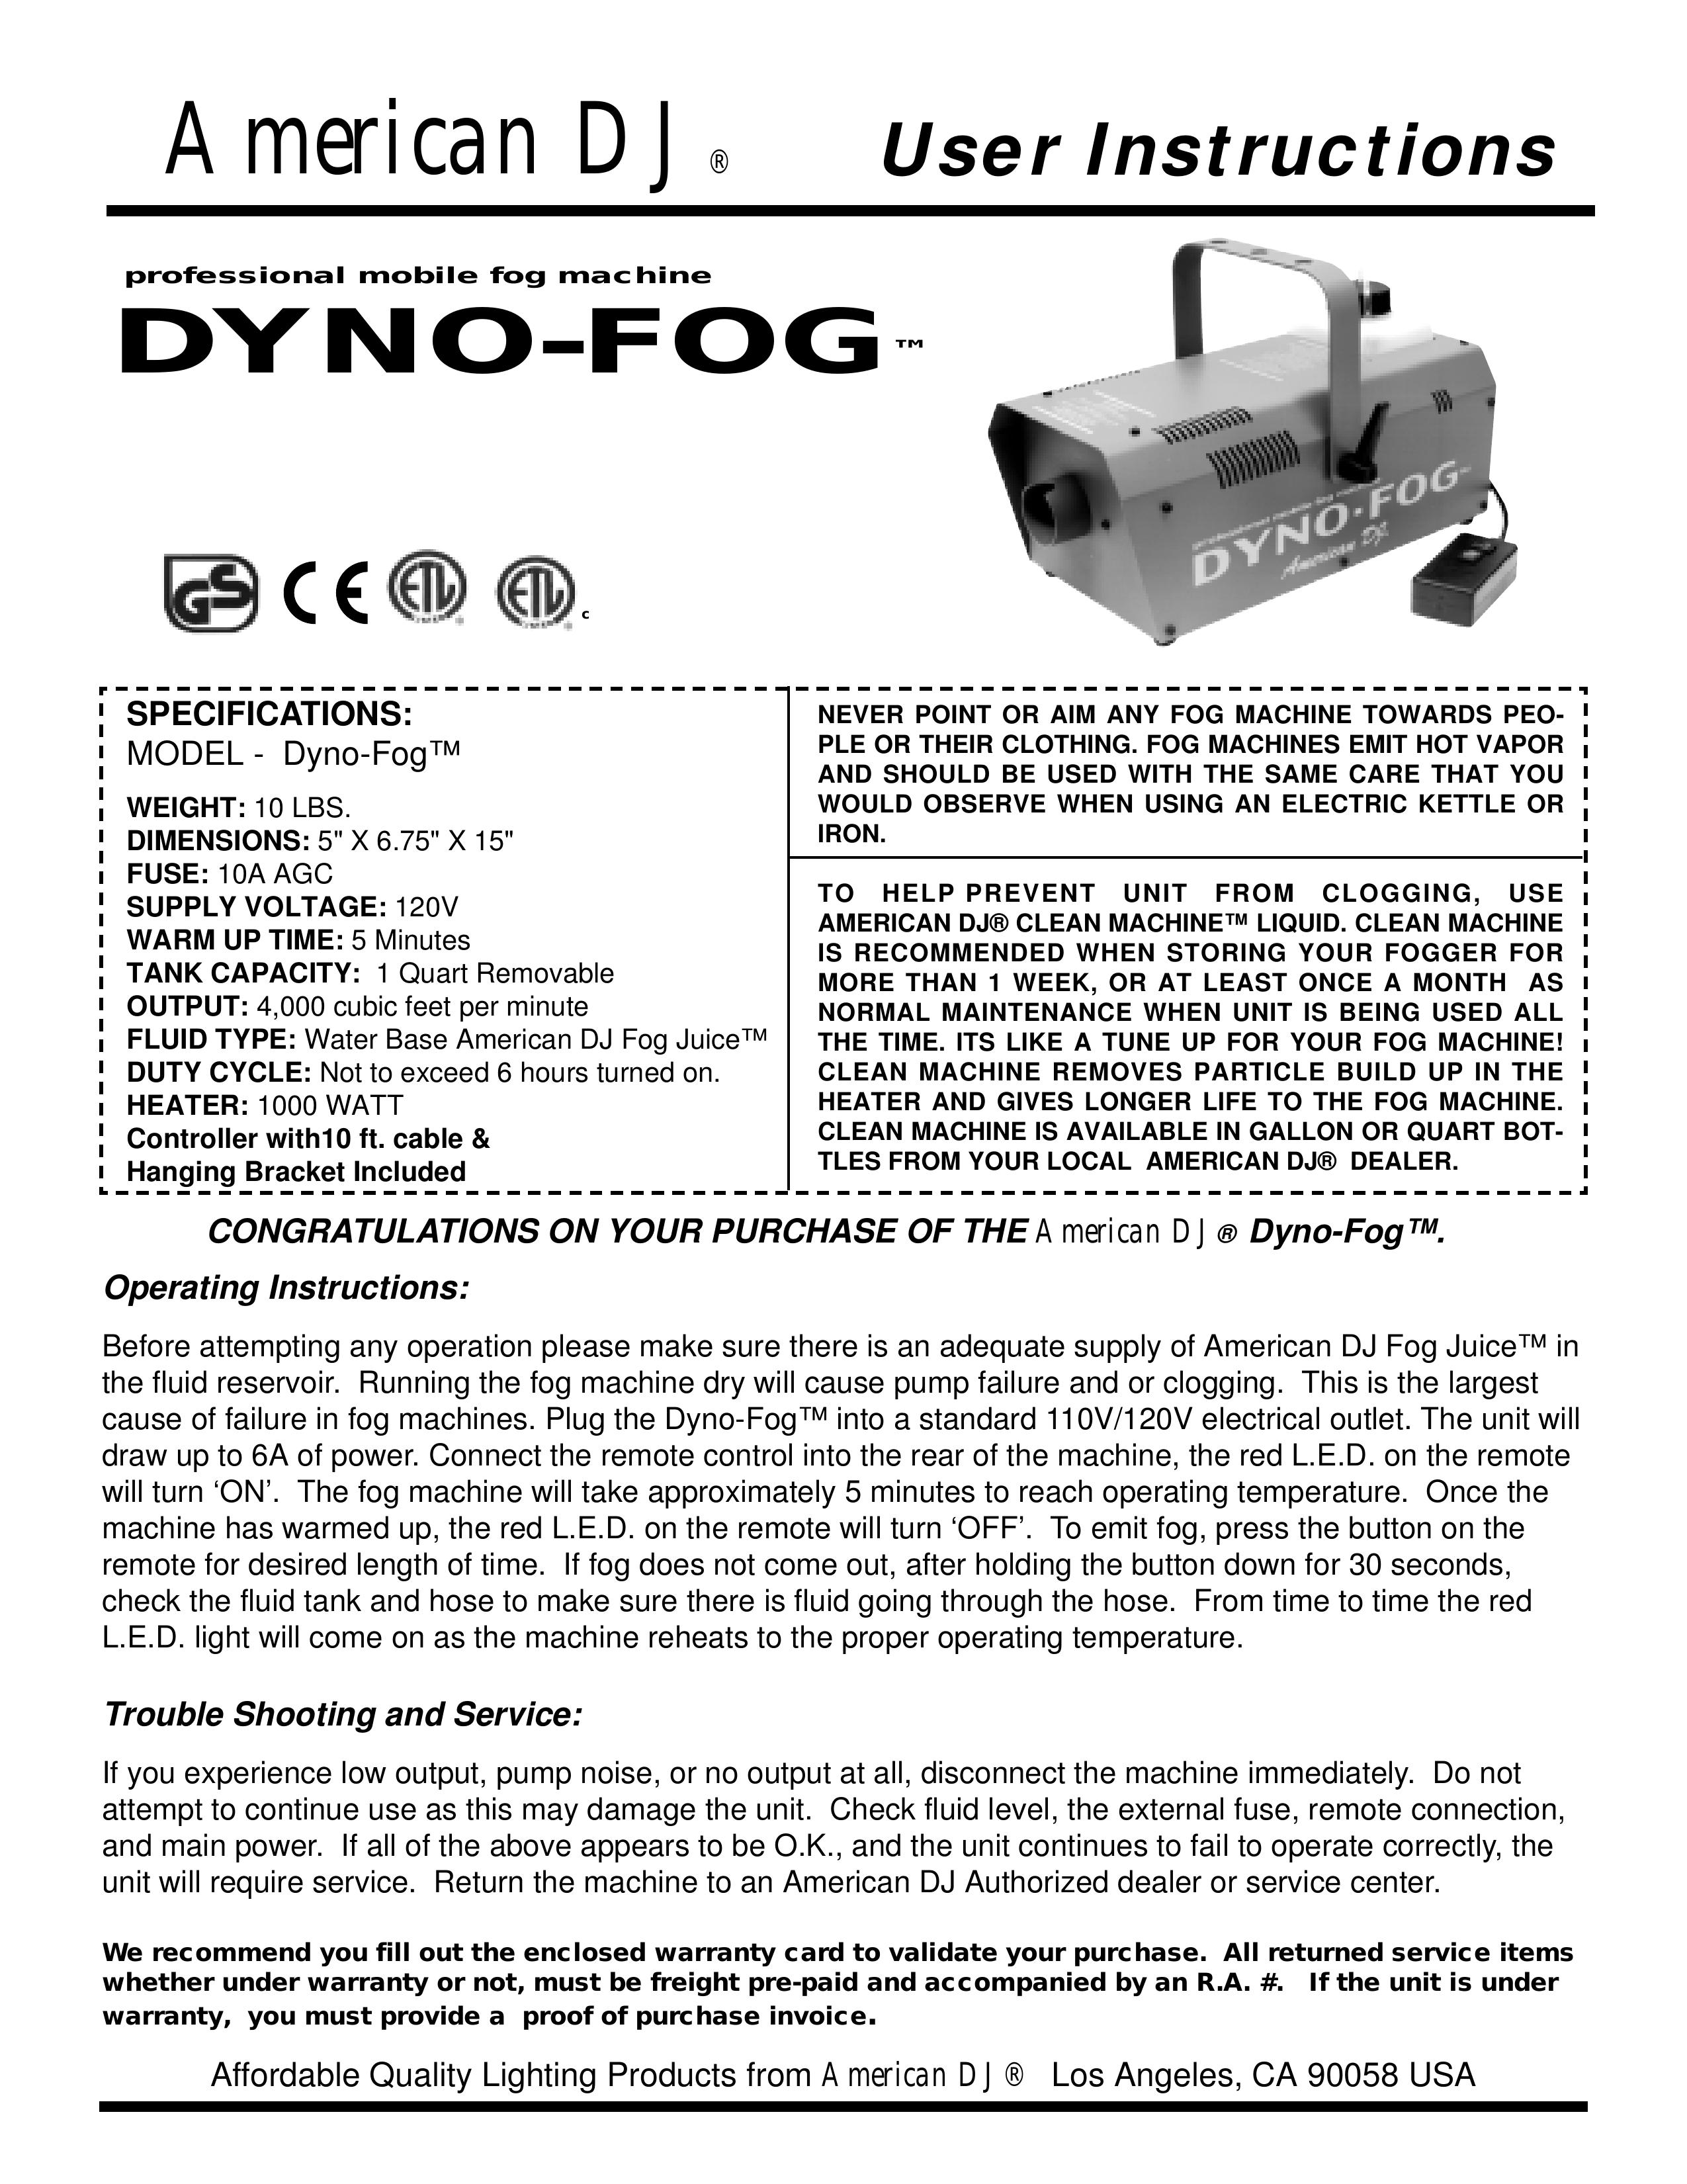 American DJ Dyno-Fog DJ Equipment User Manual